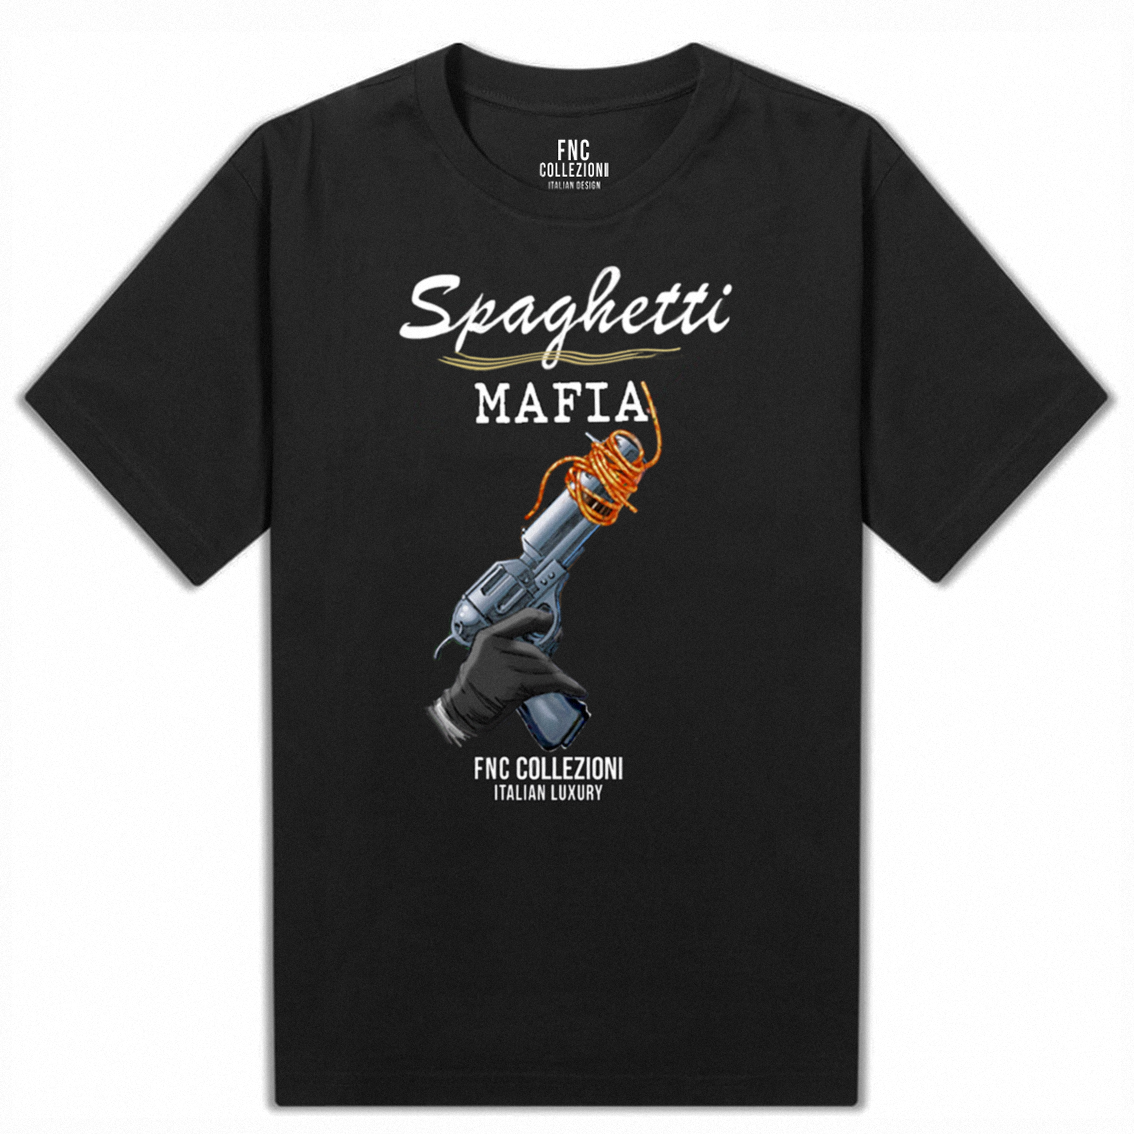 Spaghetti Mafia